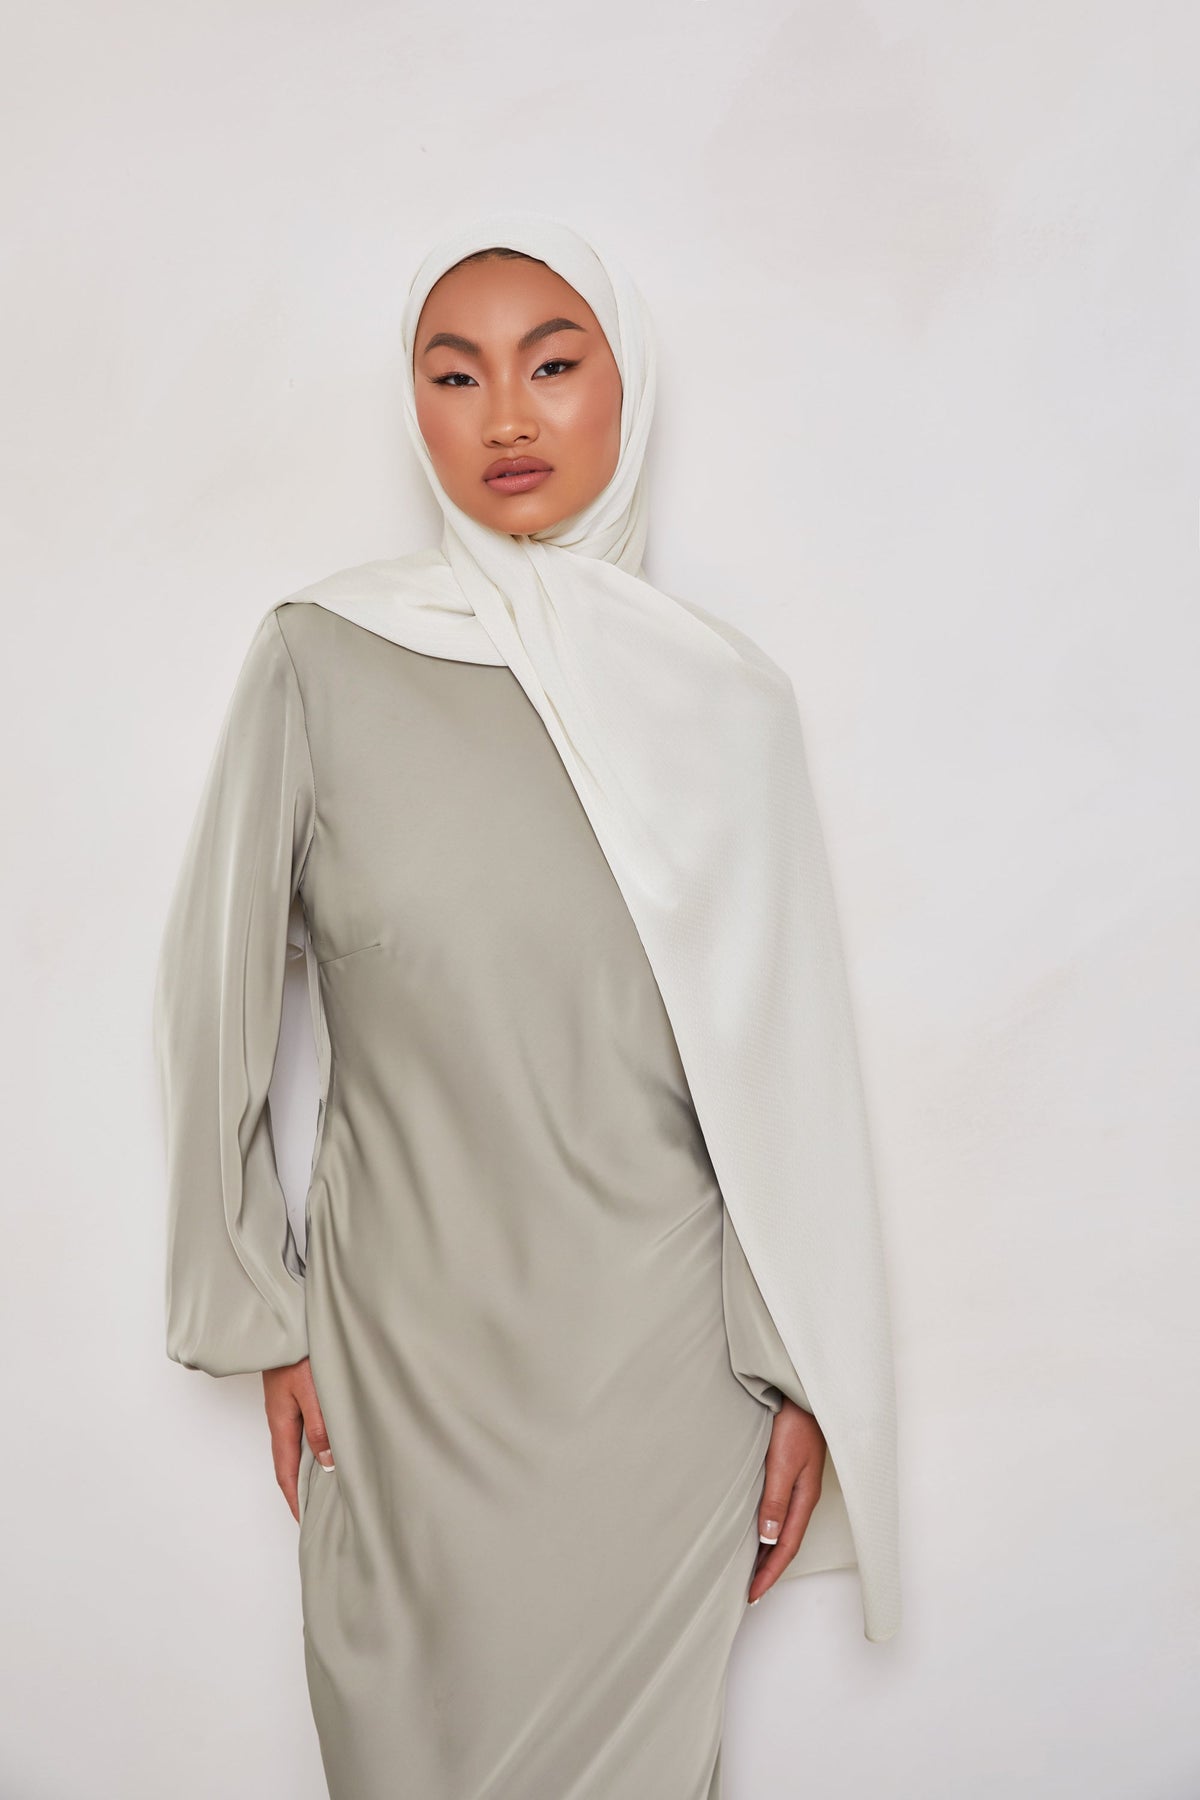 TEXTURE Crepe Hijab - Ivory Dots epschoolboard 